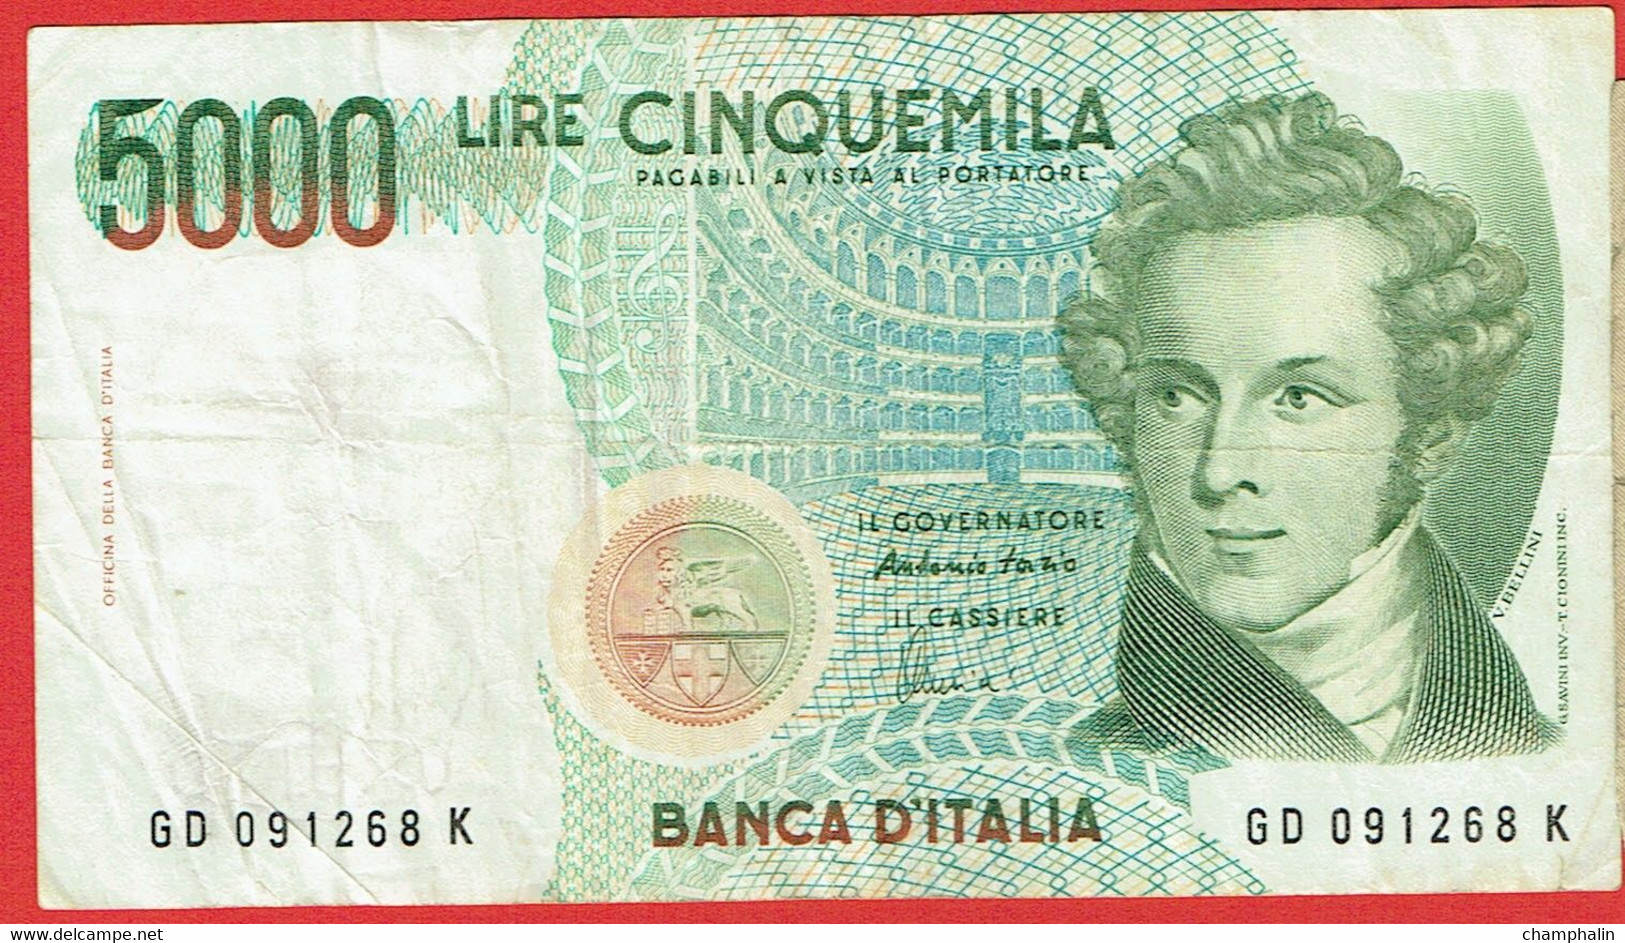 Italie - Billet De 5000 Lire - Vincenzo Bellini - 4 Juin 1985 - P111c - 5000 Liras